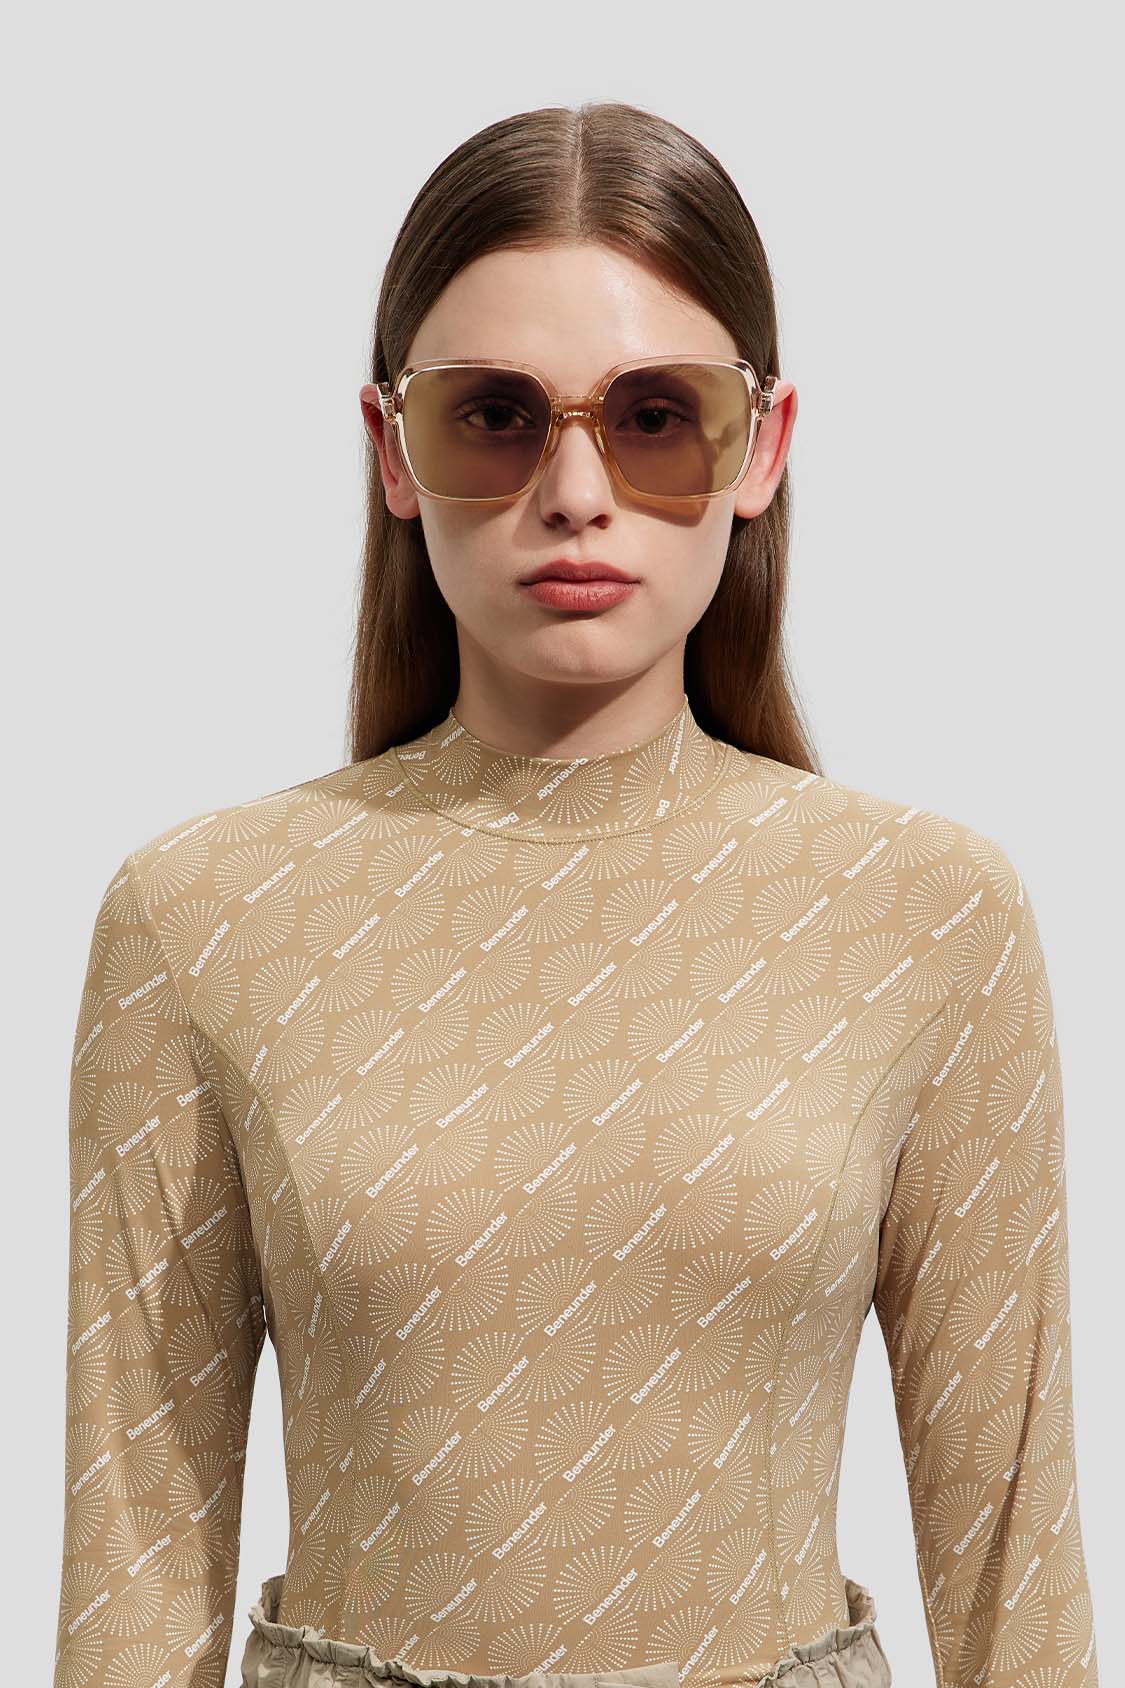 beneunder women's sunglasses #color_light brown